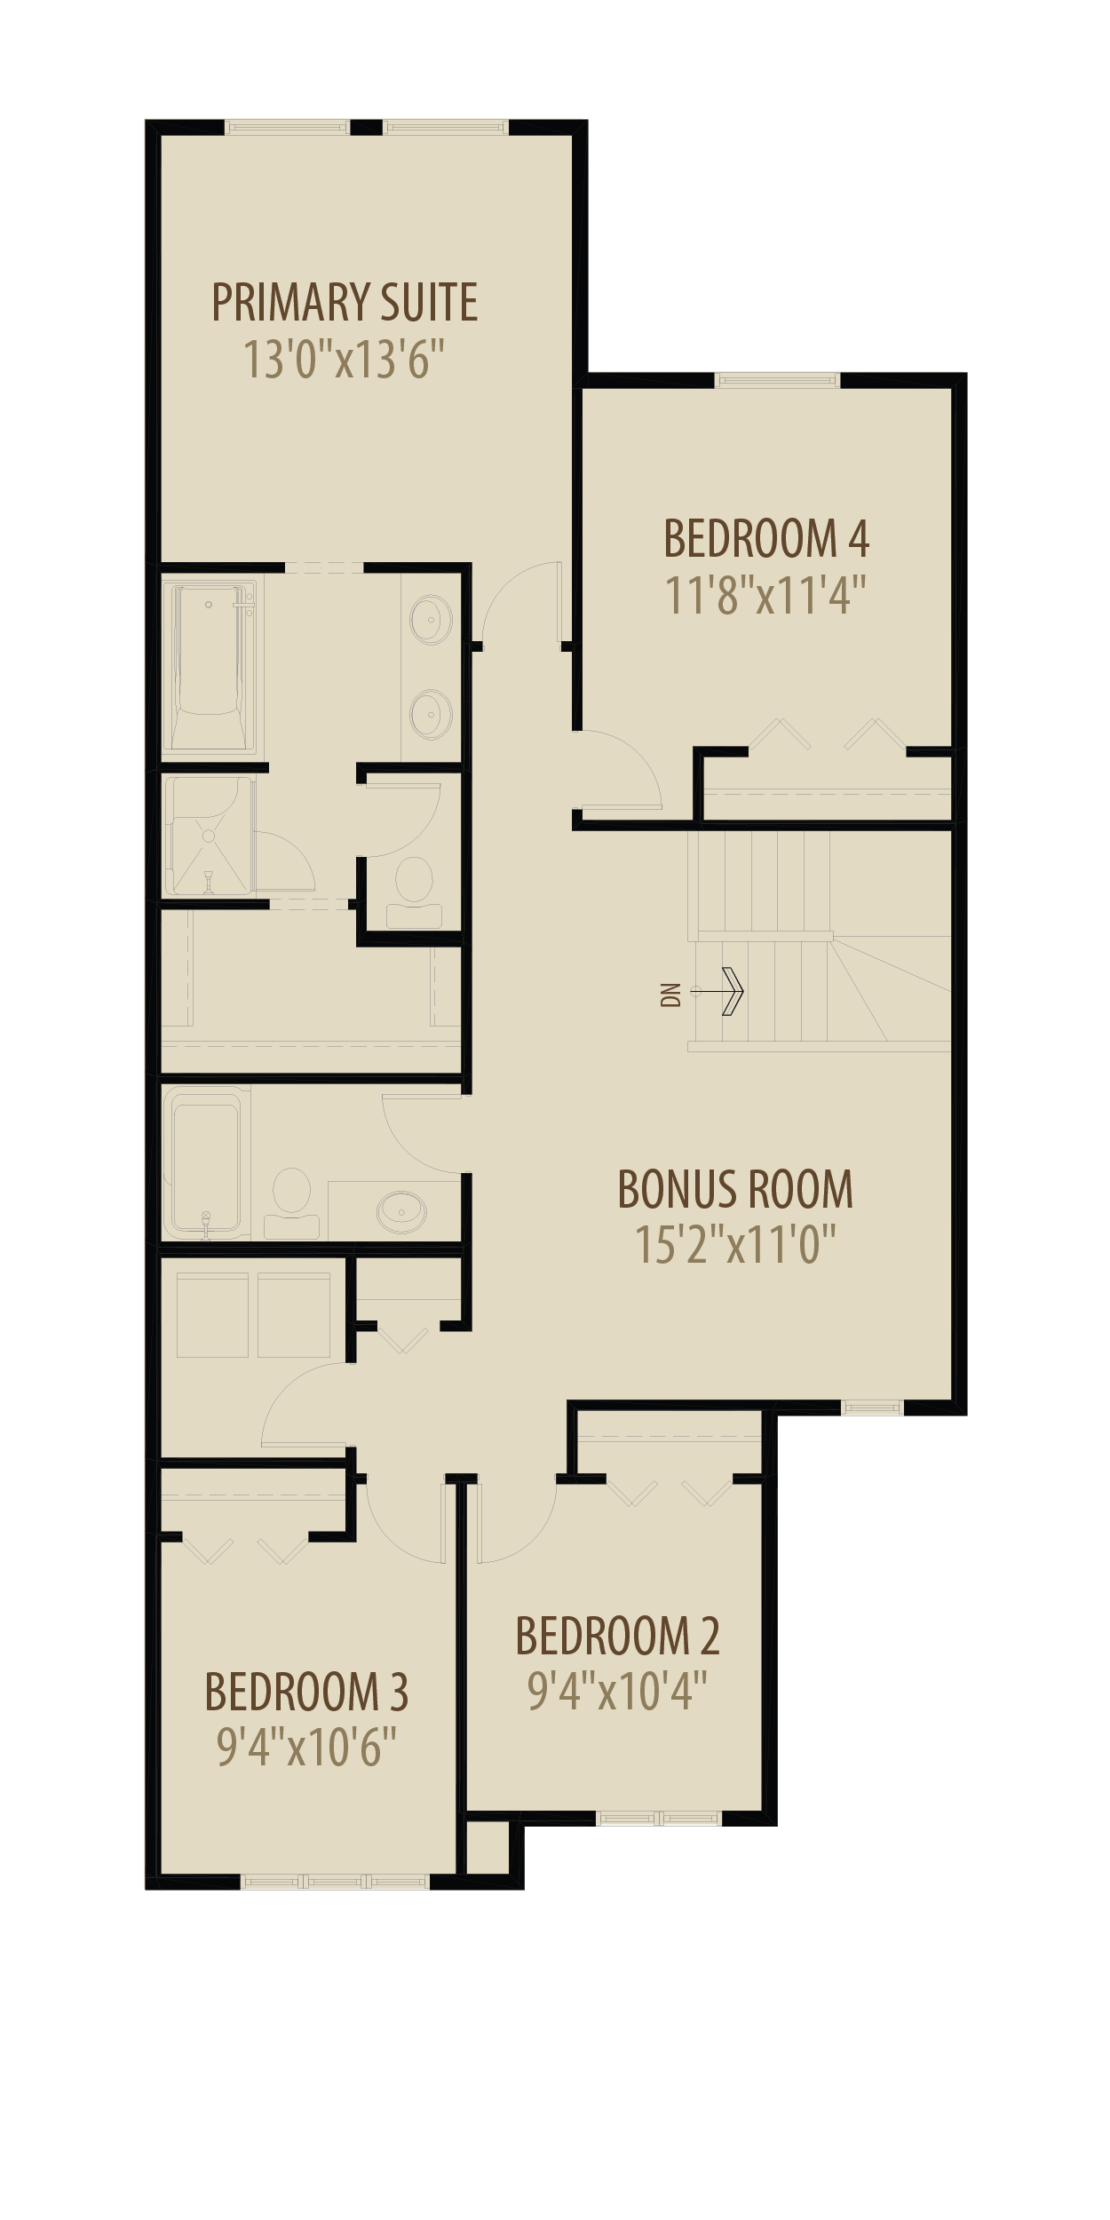 4th Bedroom and Bonus Room adds 72 sq ft